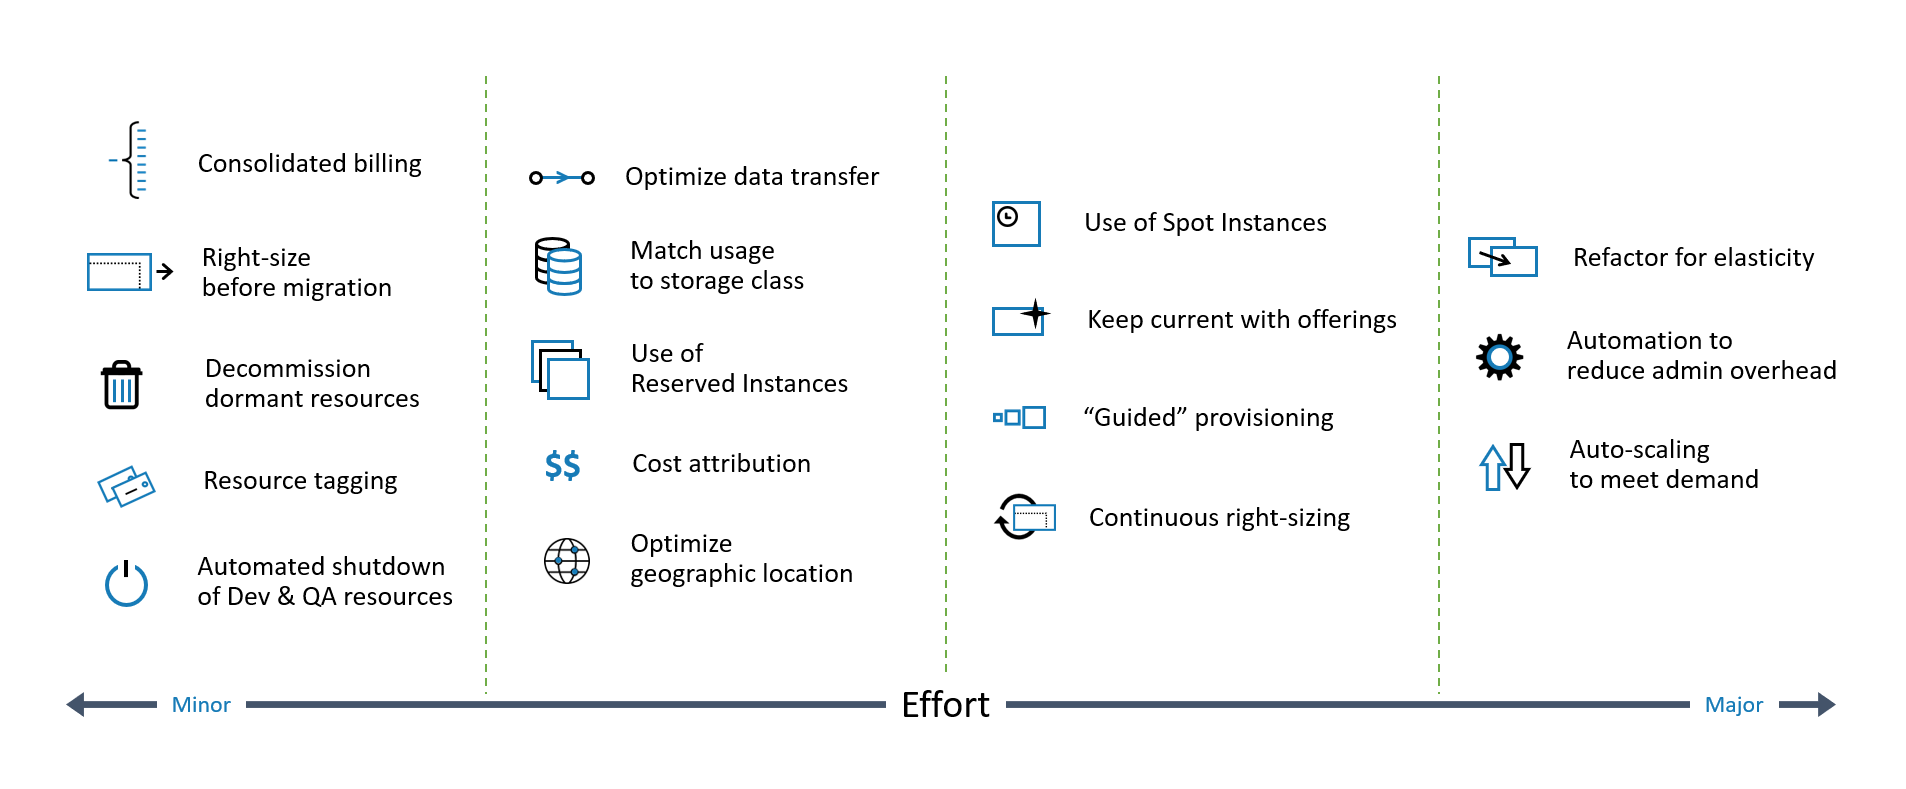 cloud cost optimization activities and effort chart